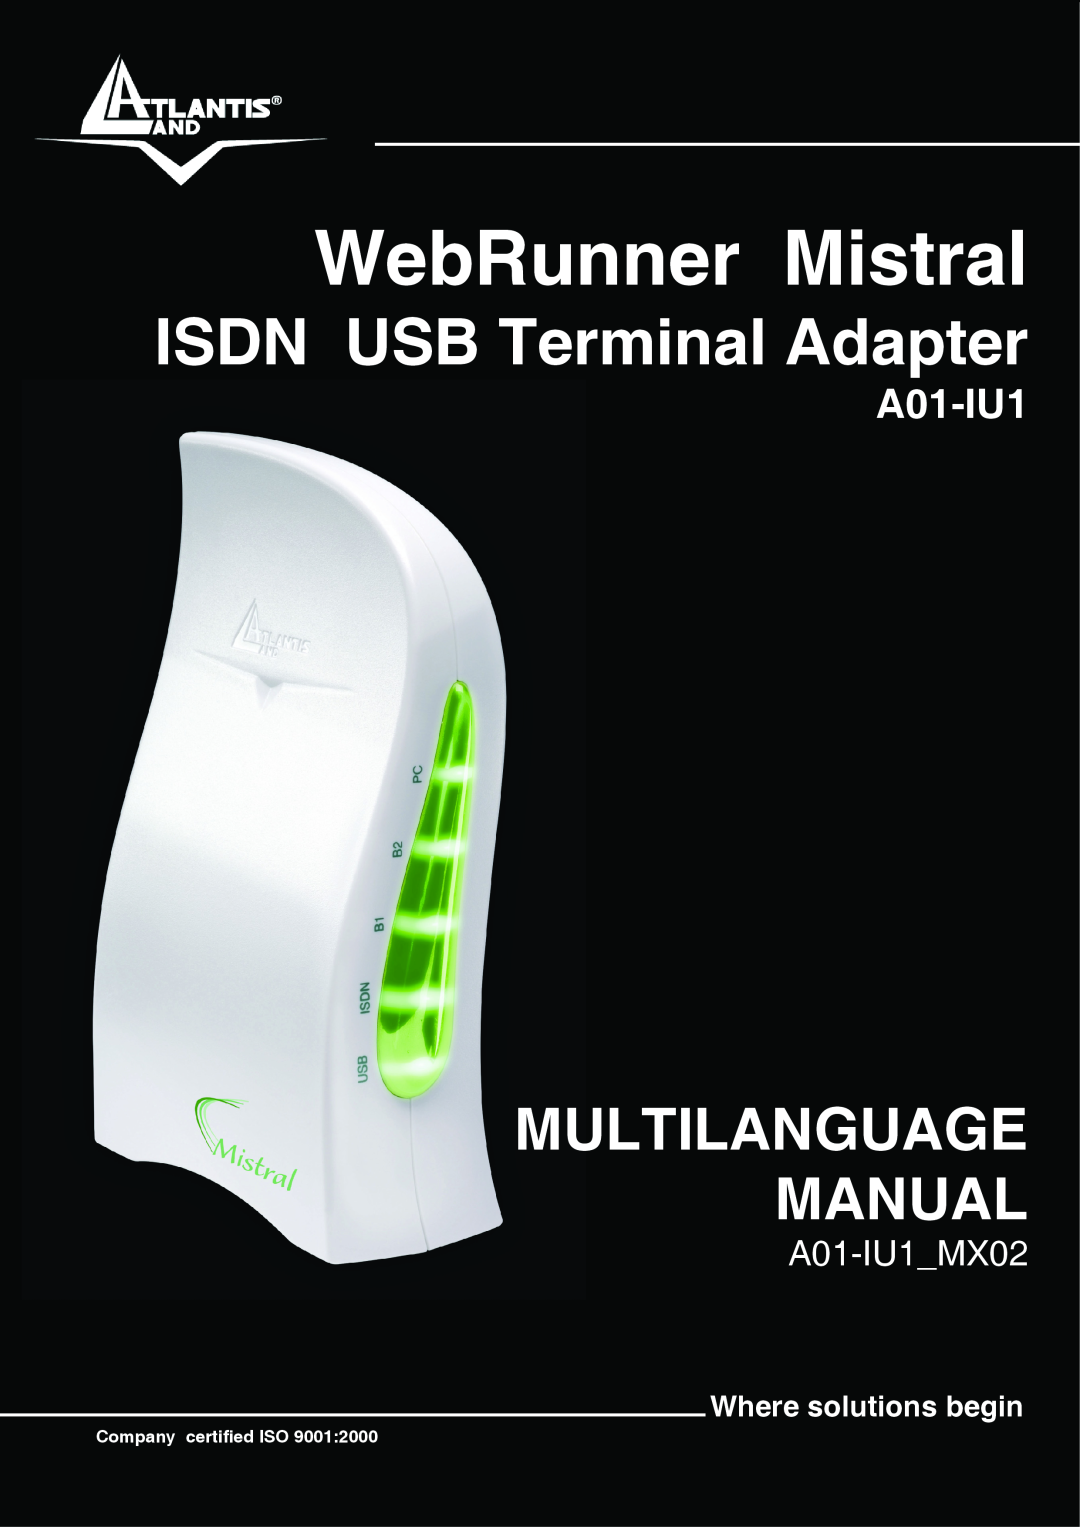 Atlantis Land manual WebRunner Mistral, ISDN USB Terminal Adapter, Multilanguage Manual, A01-IU1MX02 